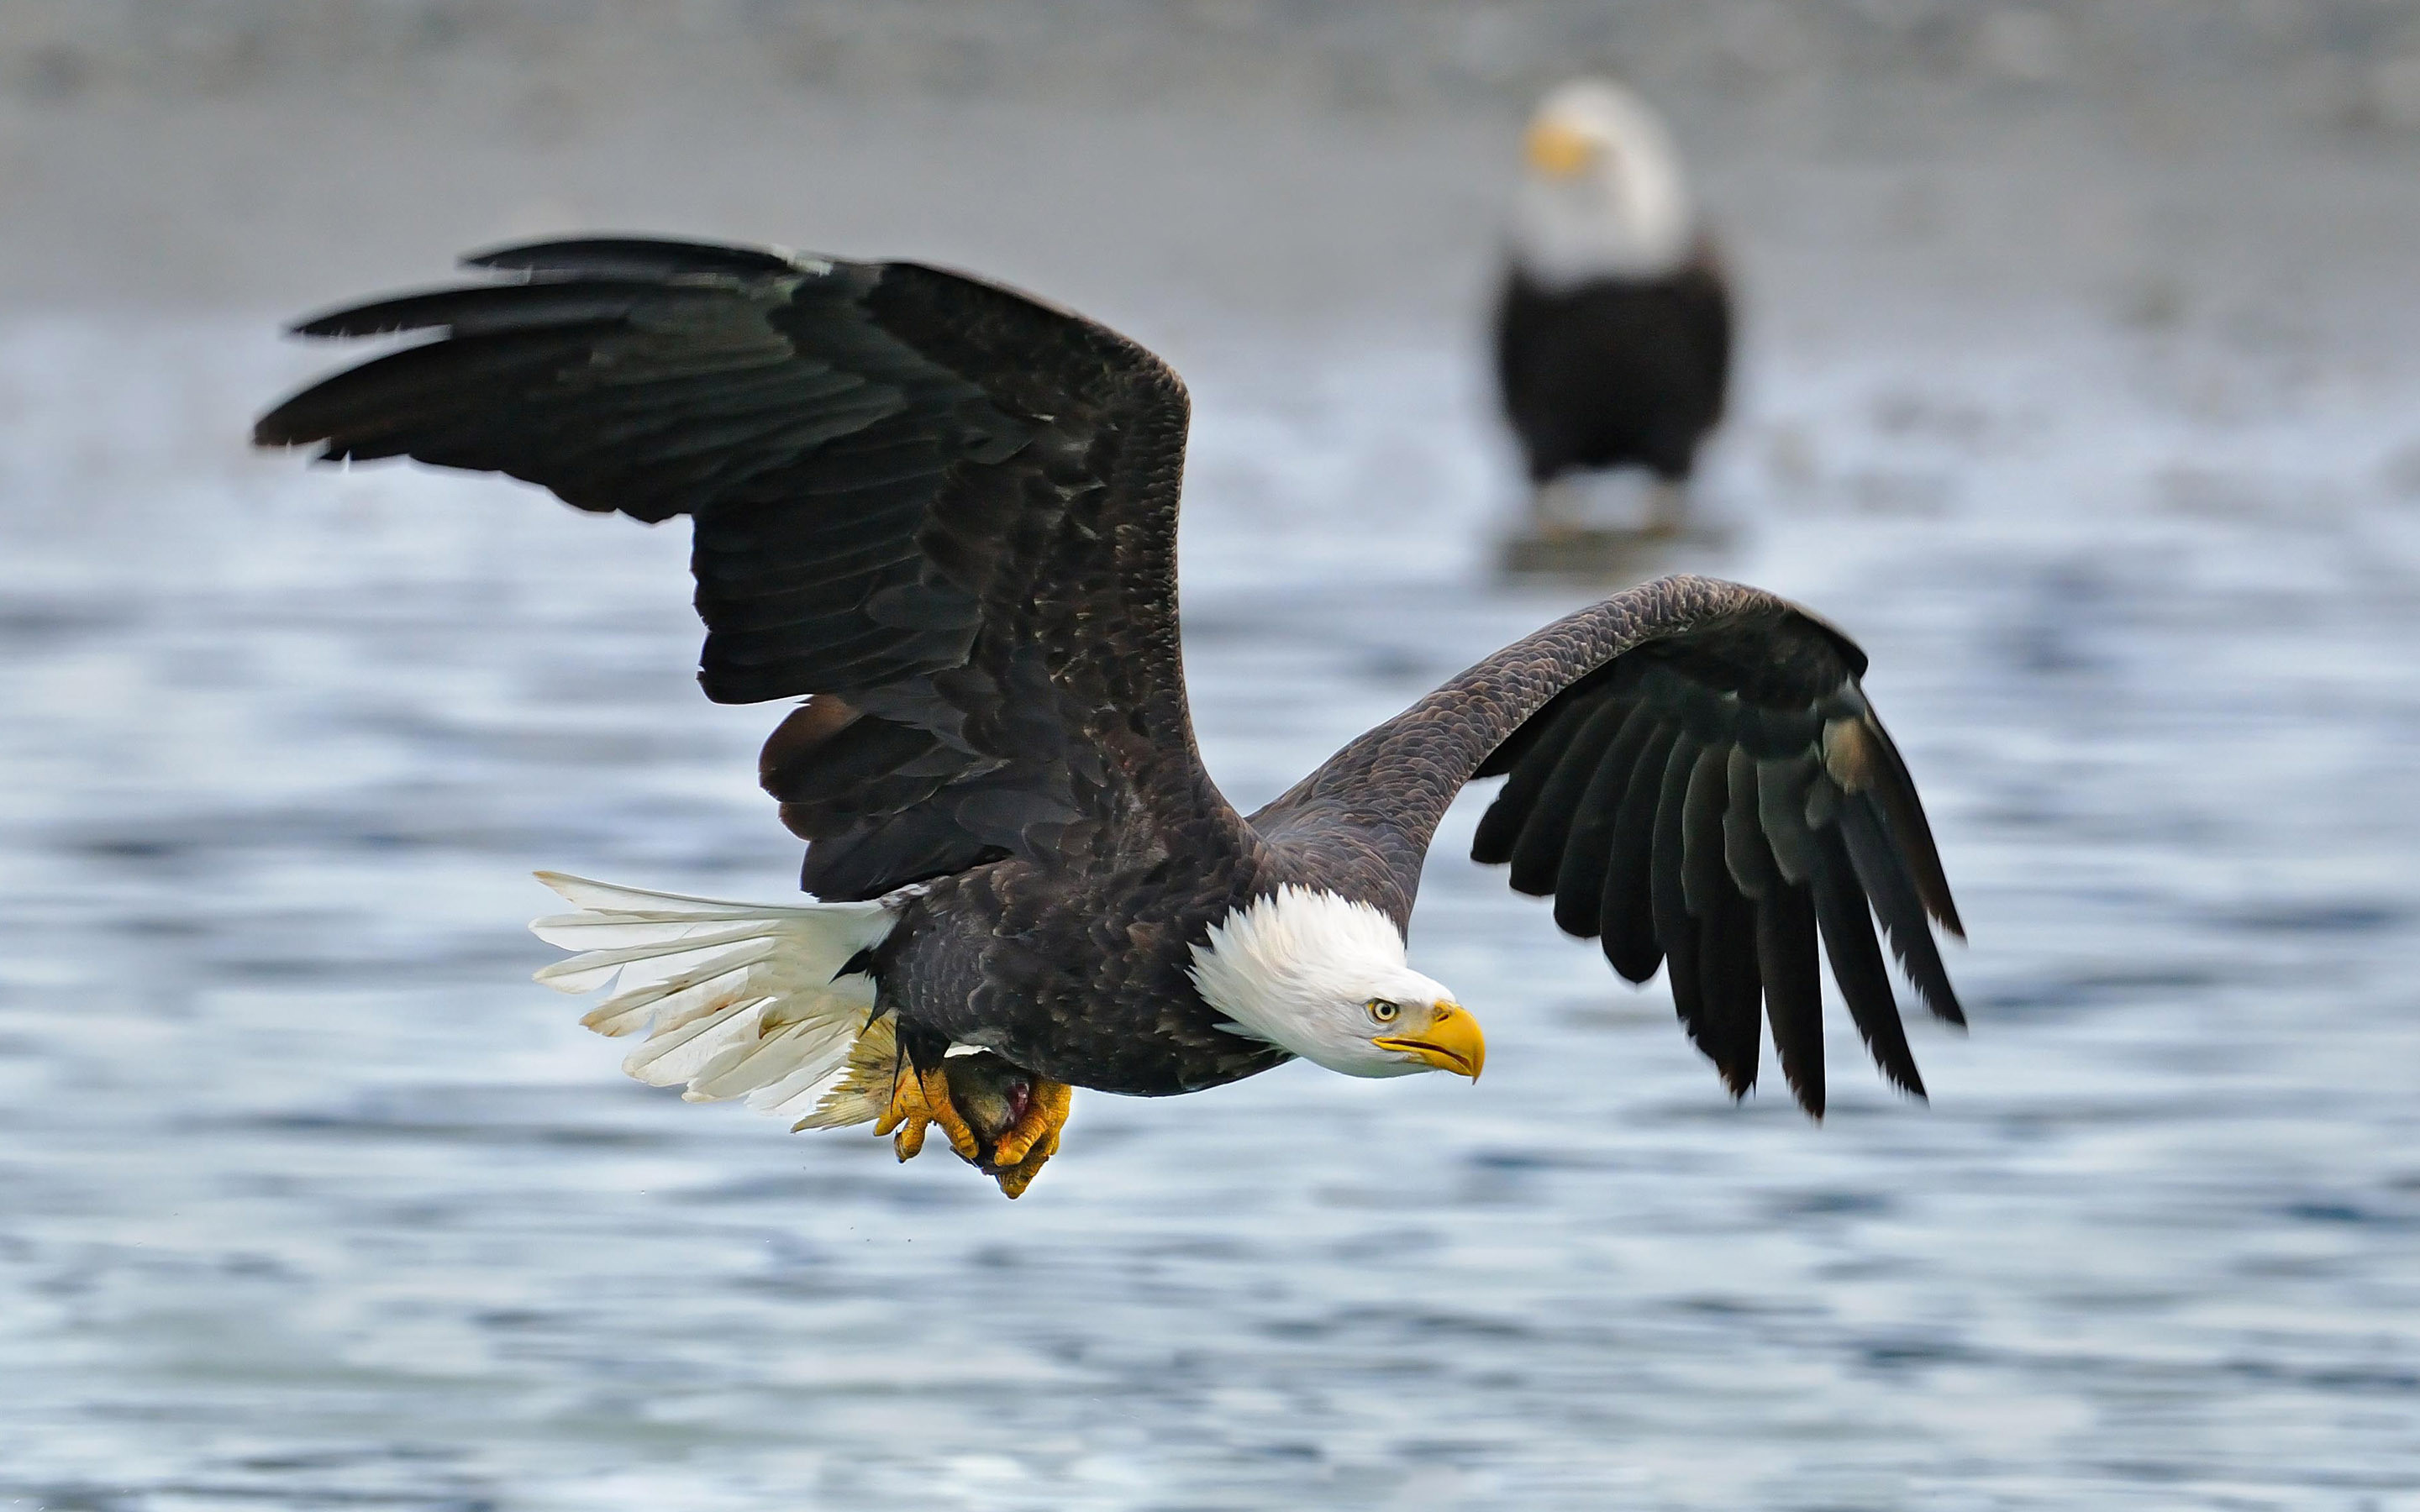 flying eagle wallpaper,bird,bald eagle,vertebrate,bird of prey,eagle